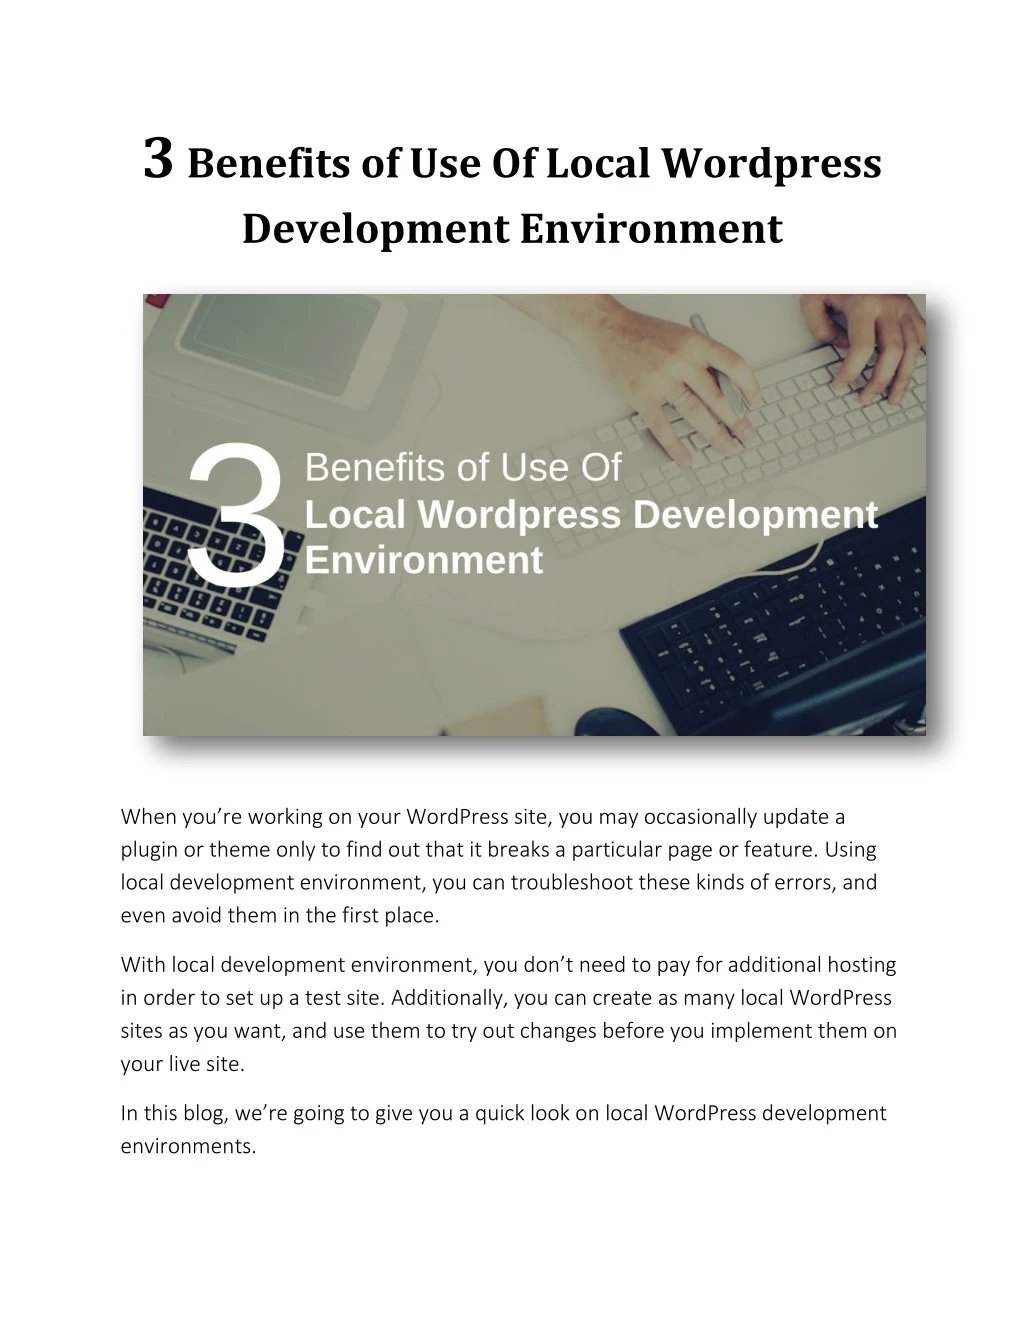 3 benefits of use of local wordpress development